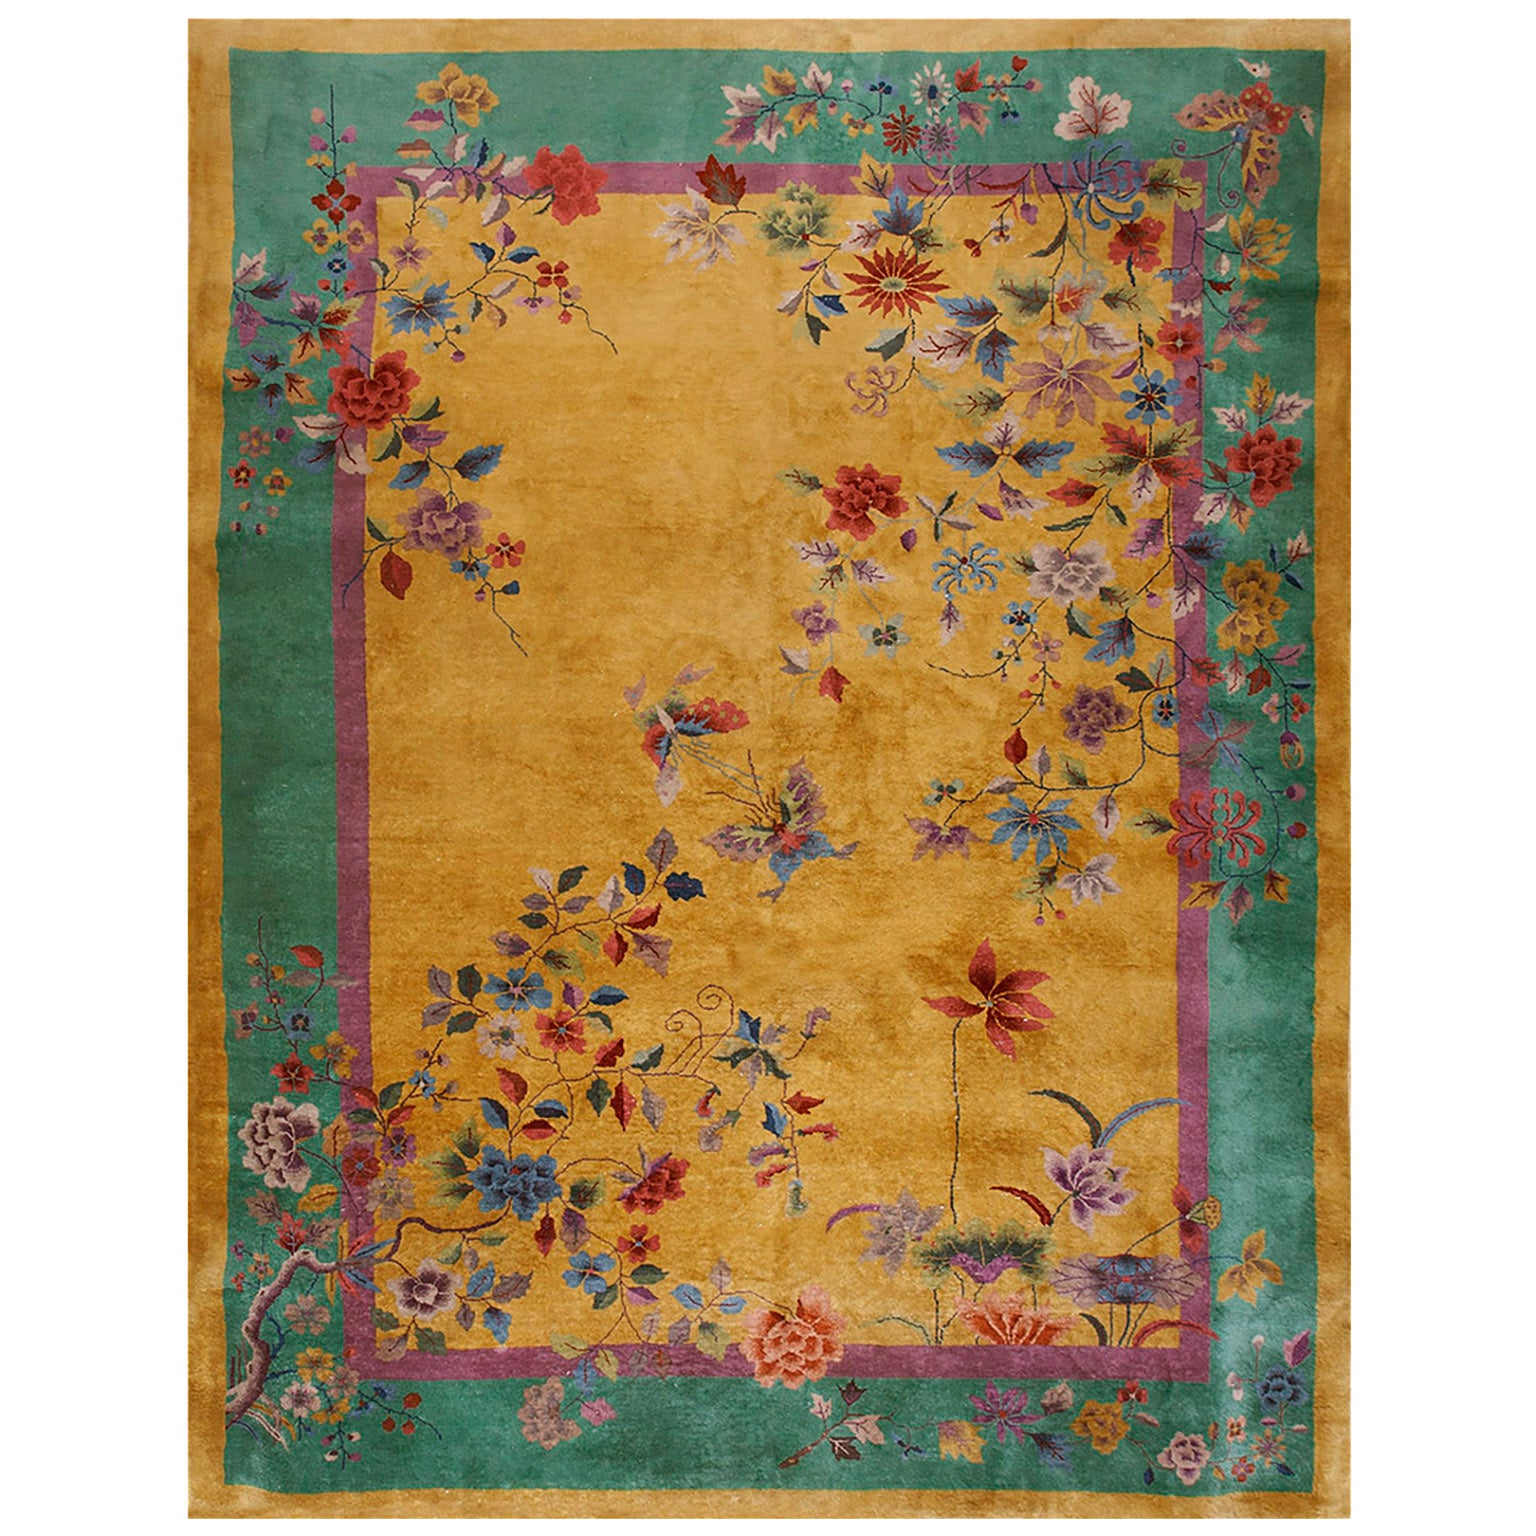 1920s Chinese Art Deco Carpet by Nichols Workshop ( 9'8" x 11' 6" - 295 x 350 ) For Sale